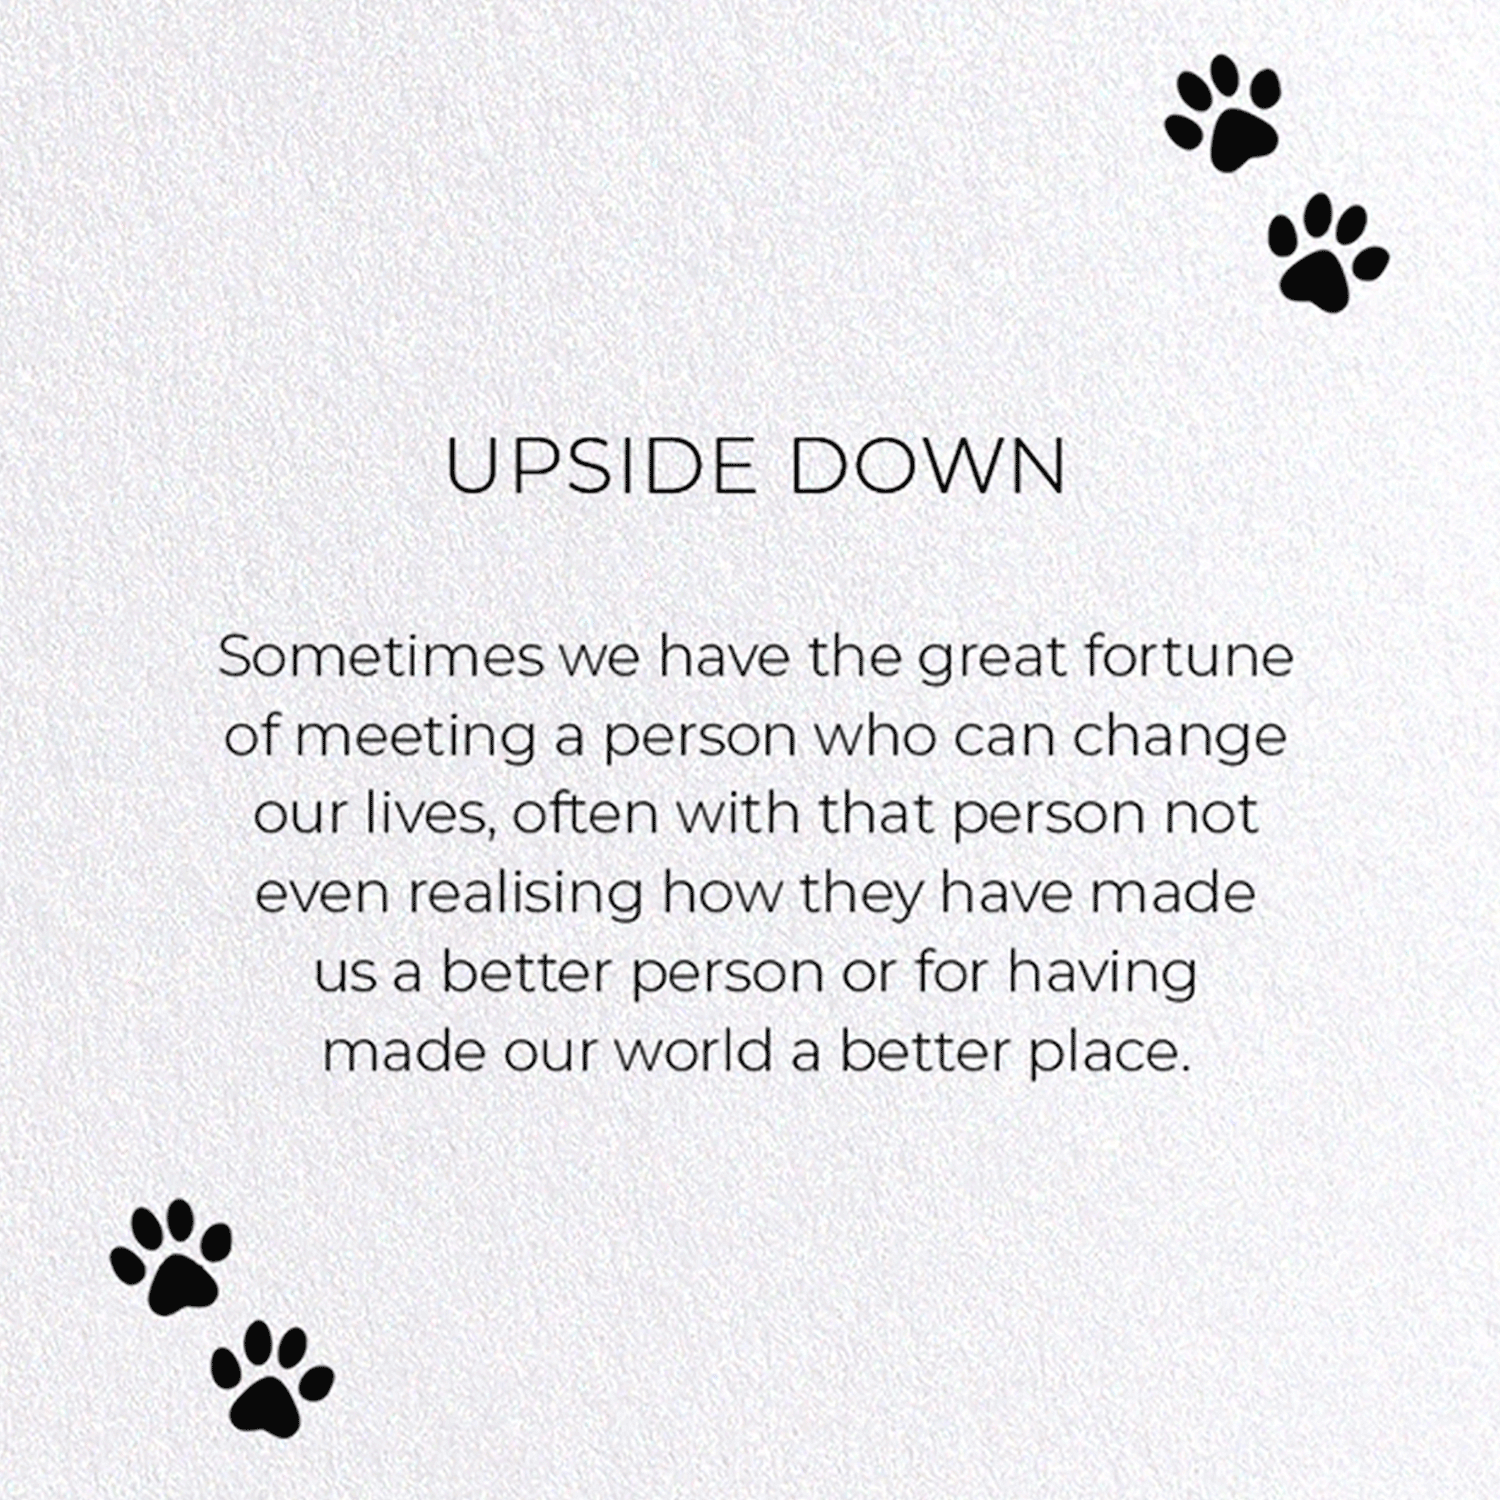 UPSIDE DOWN: Funny Animal Greeting Card